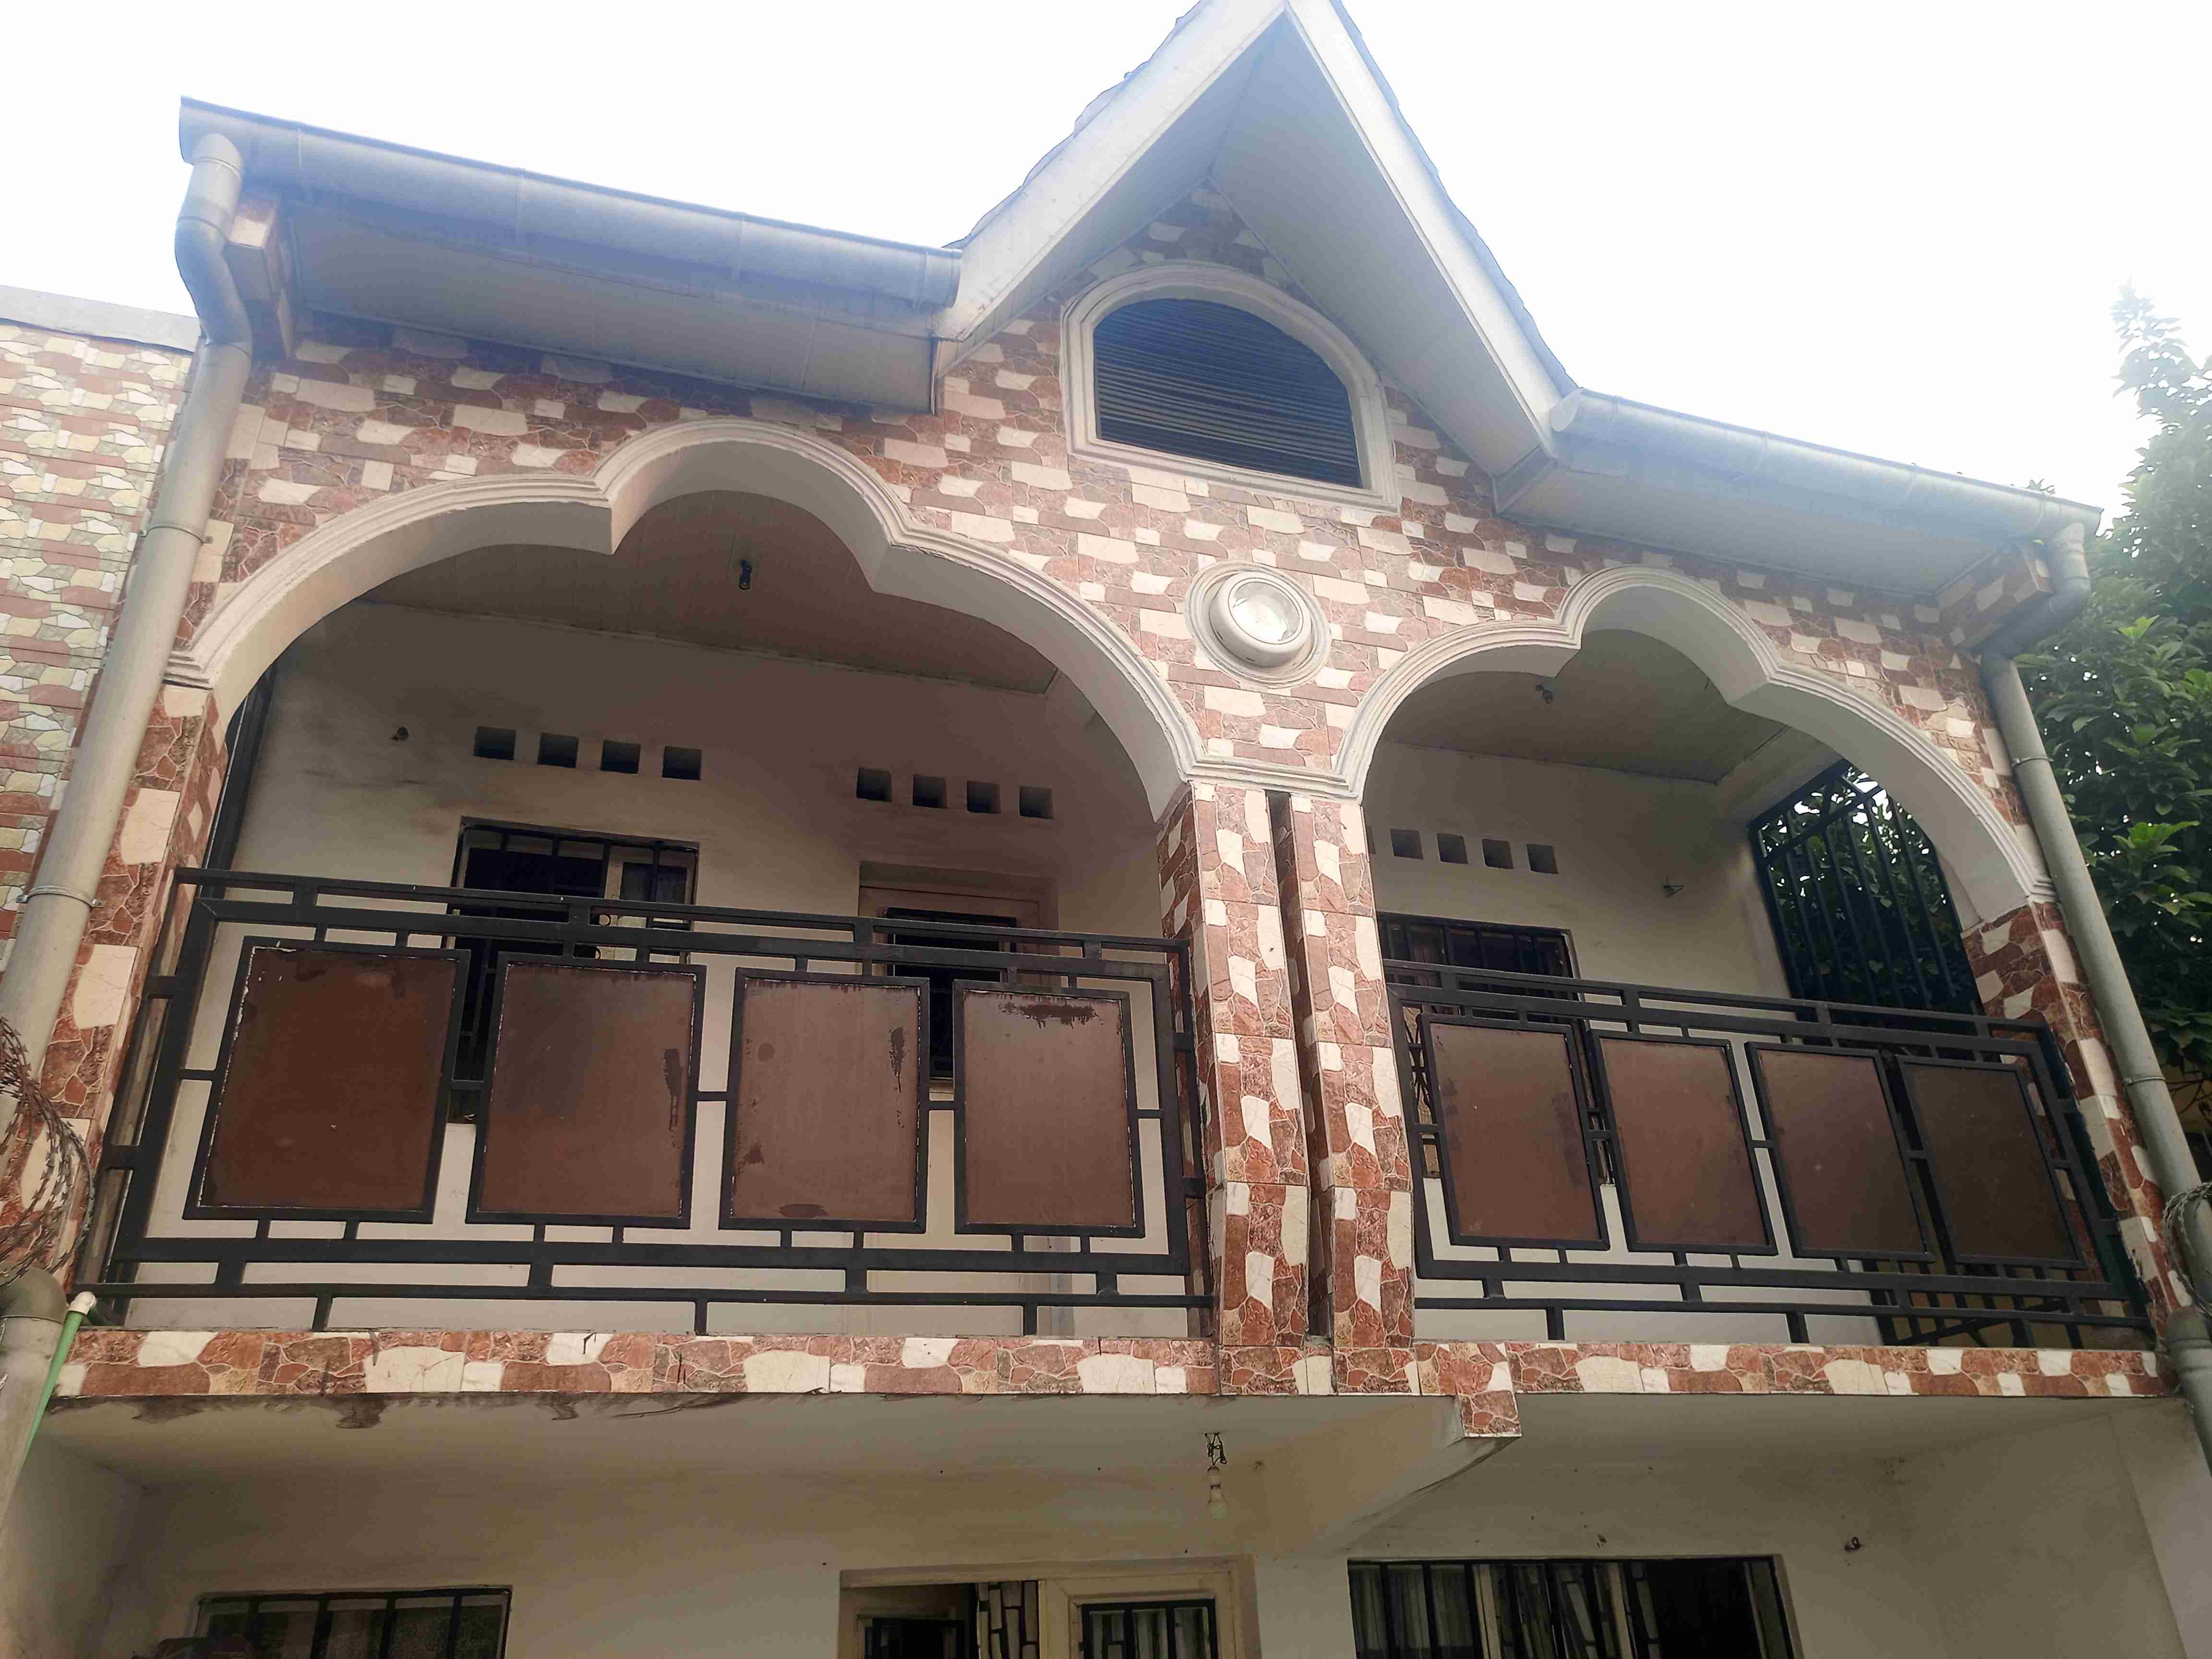 For Sale House - Neighborhood Commercial Kinshasa Lemba